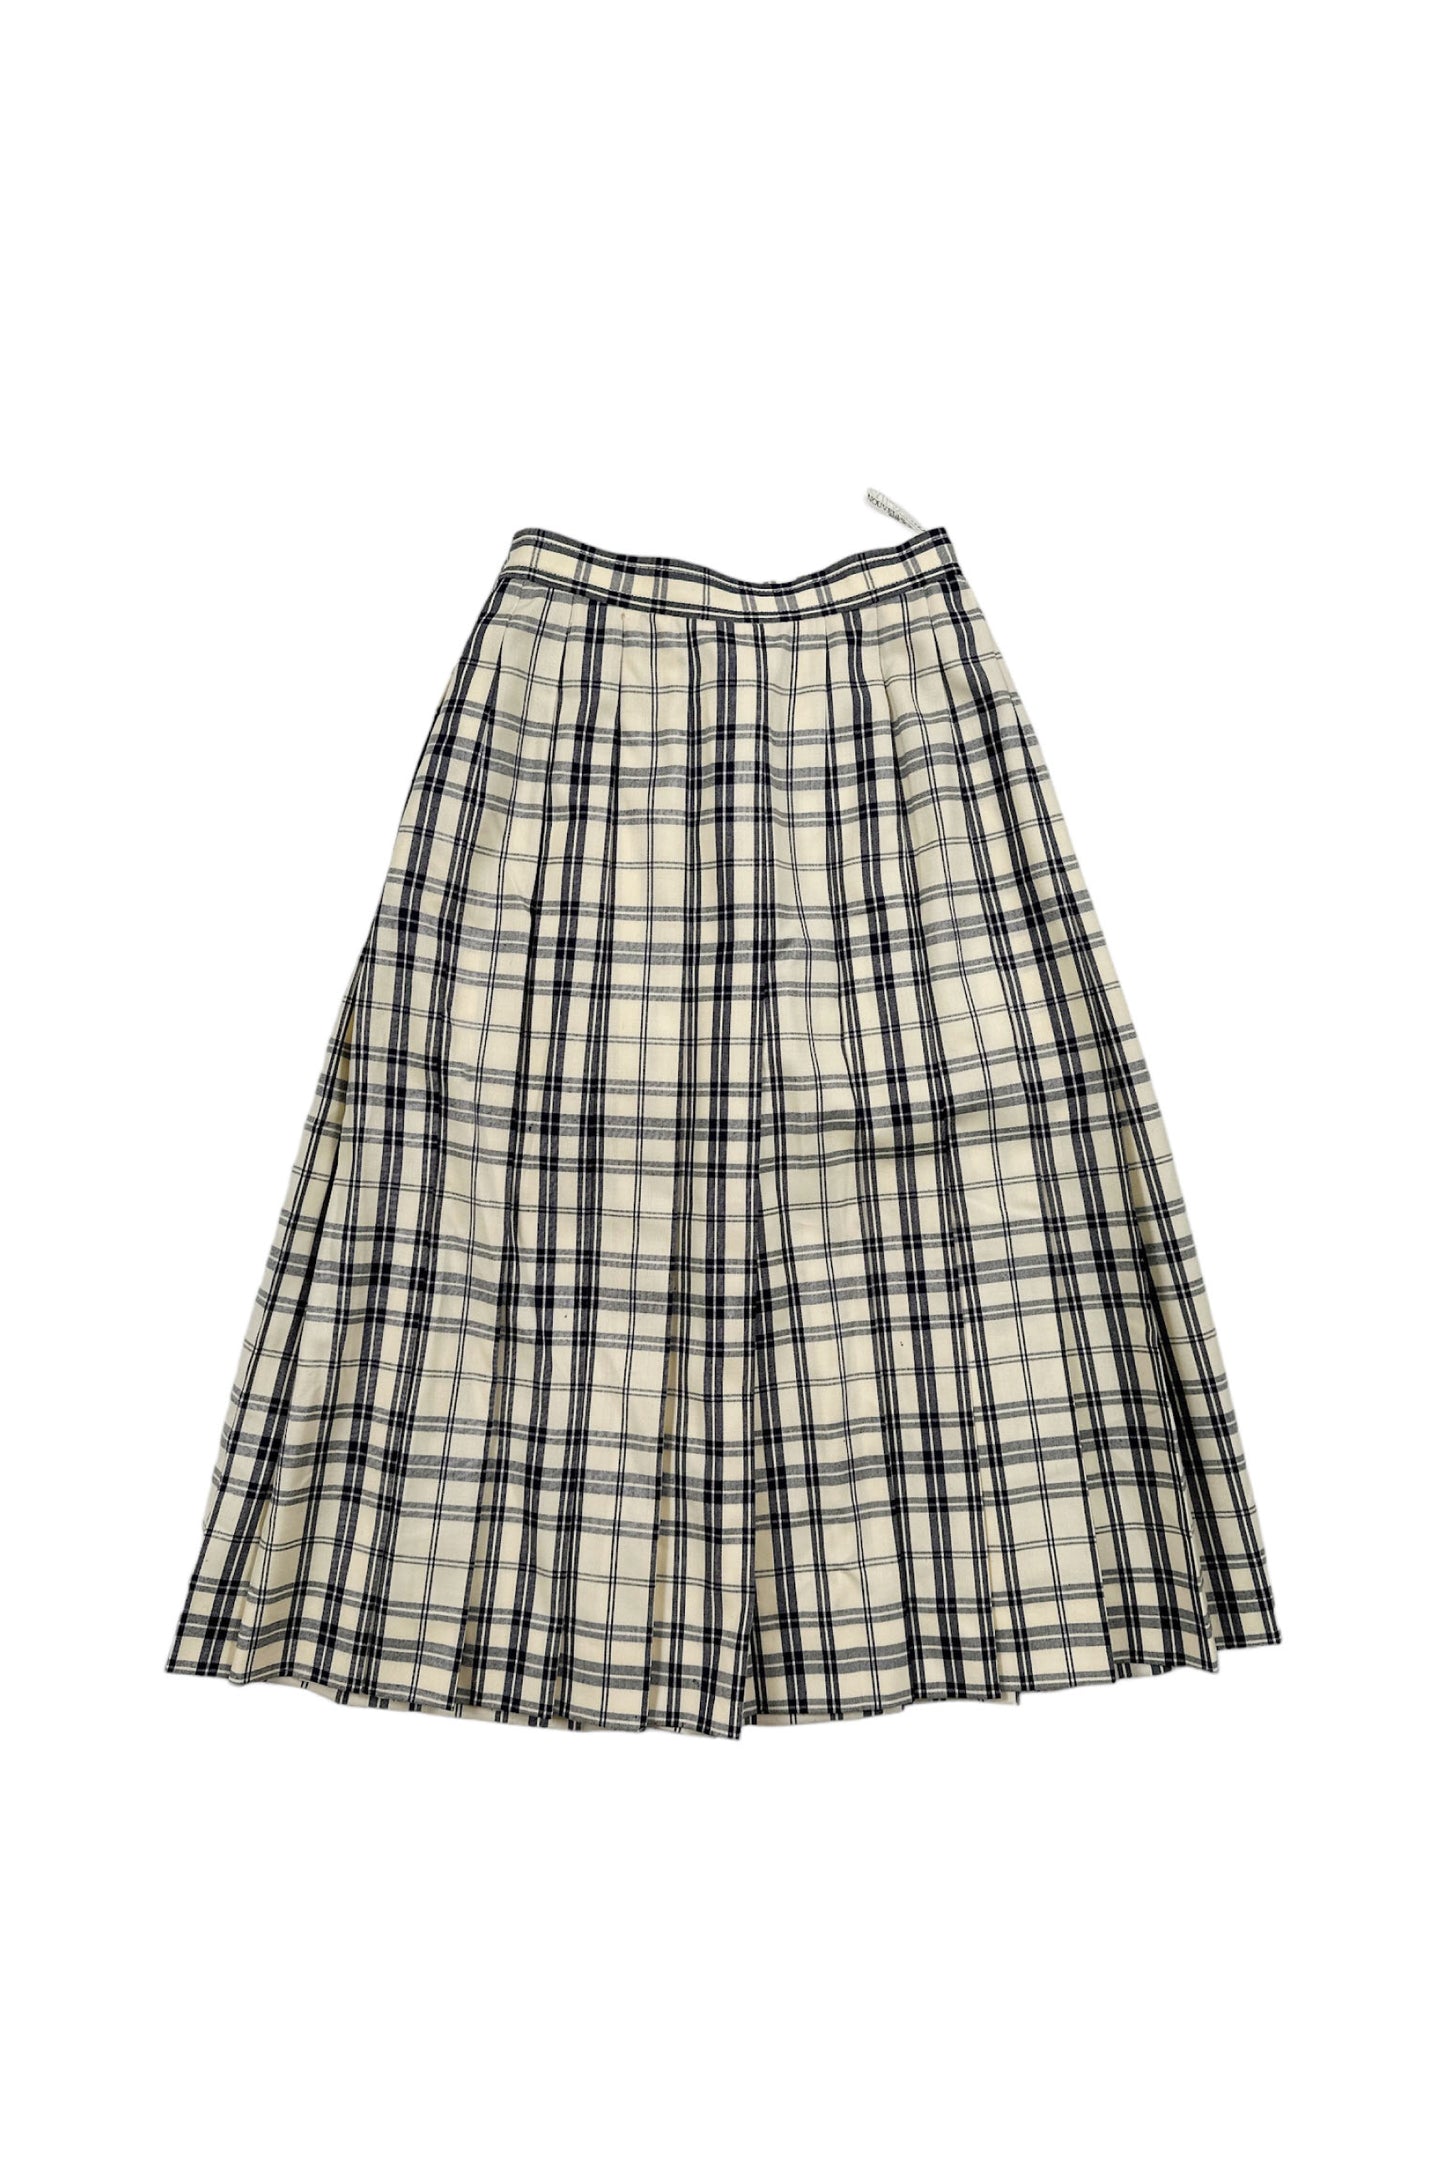 Check pleats skirt